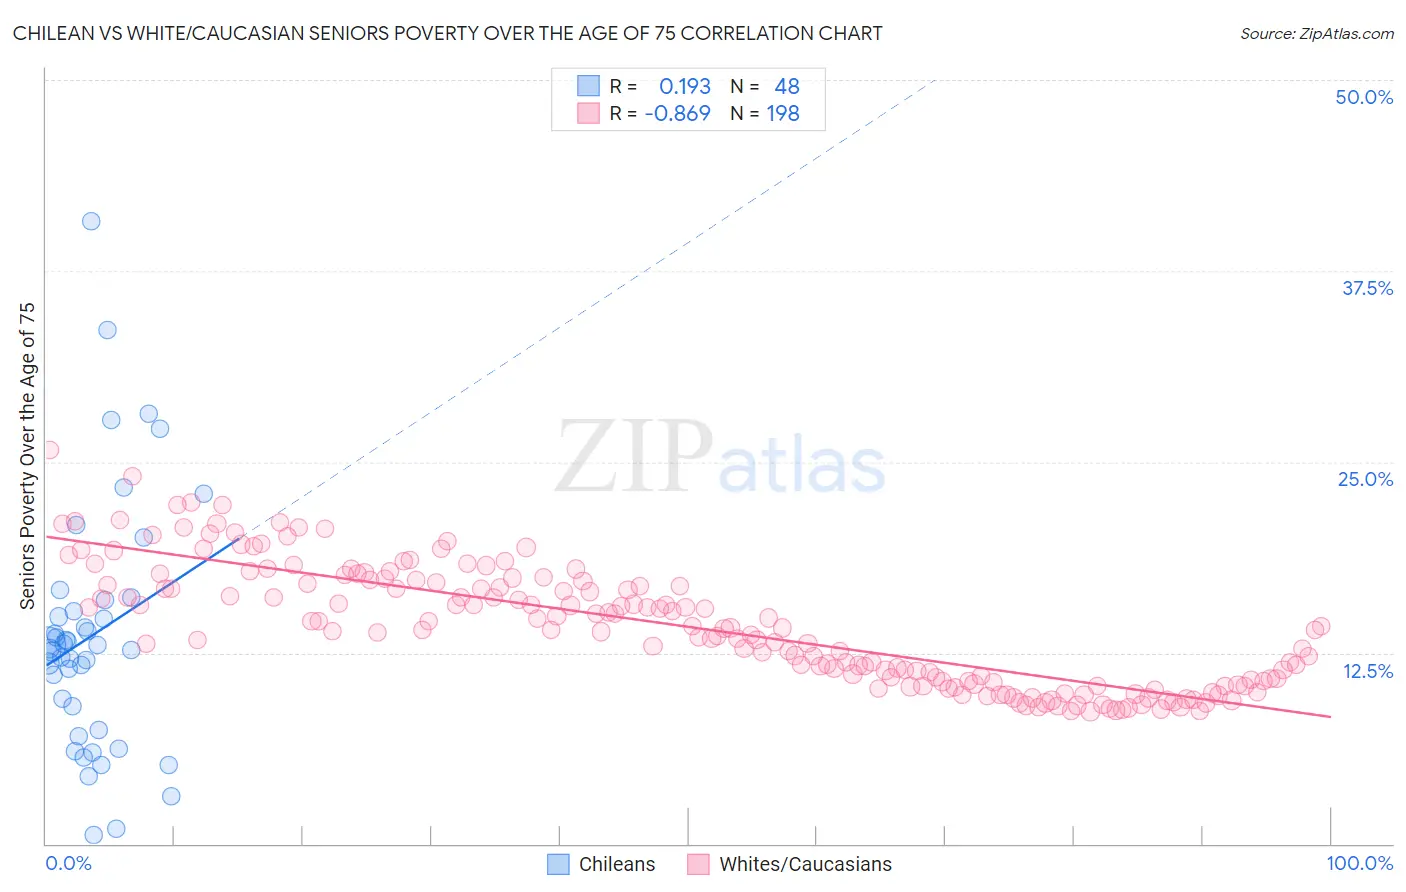 Chilean vs White/Caucasian Seniors Poverty Over the Age of 75